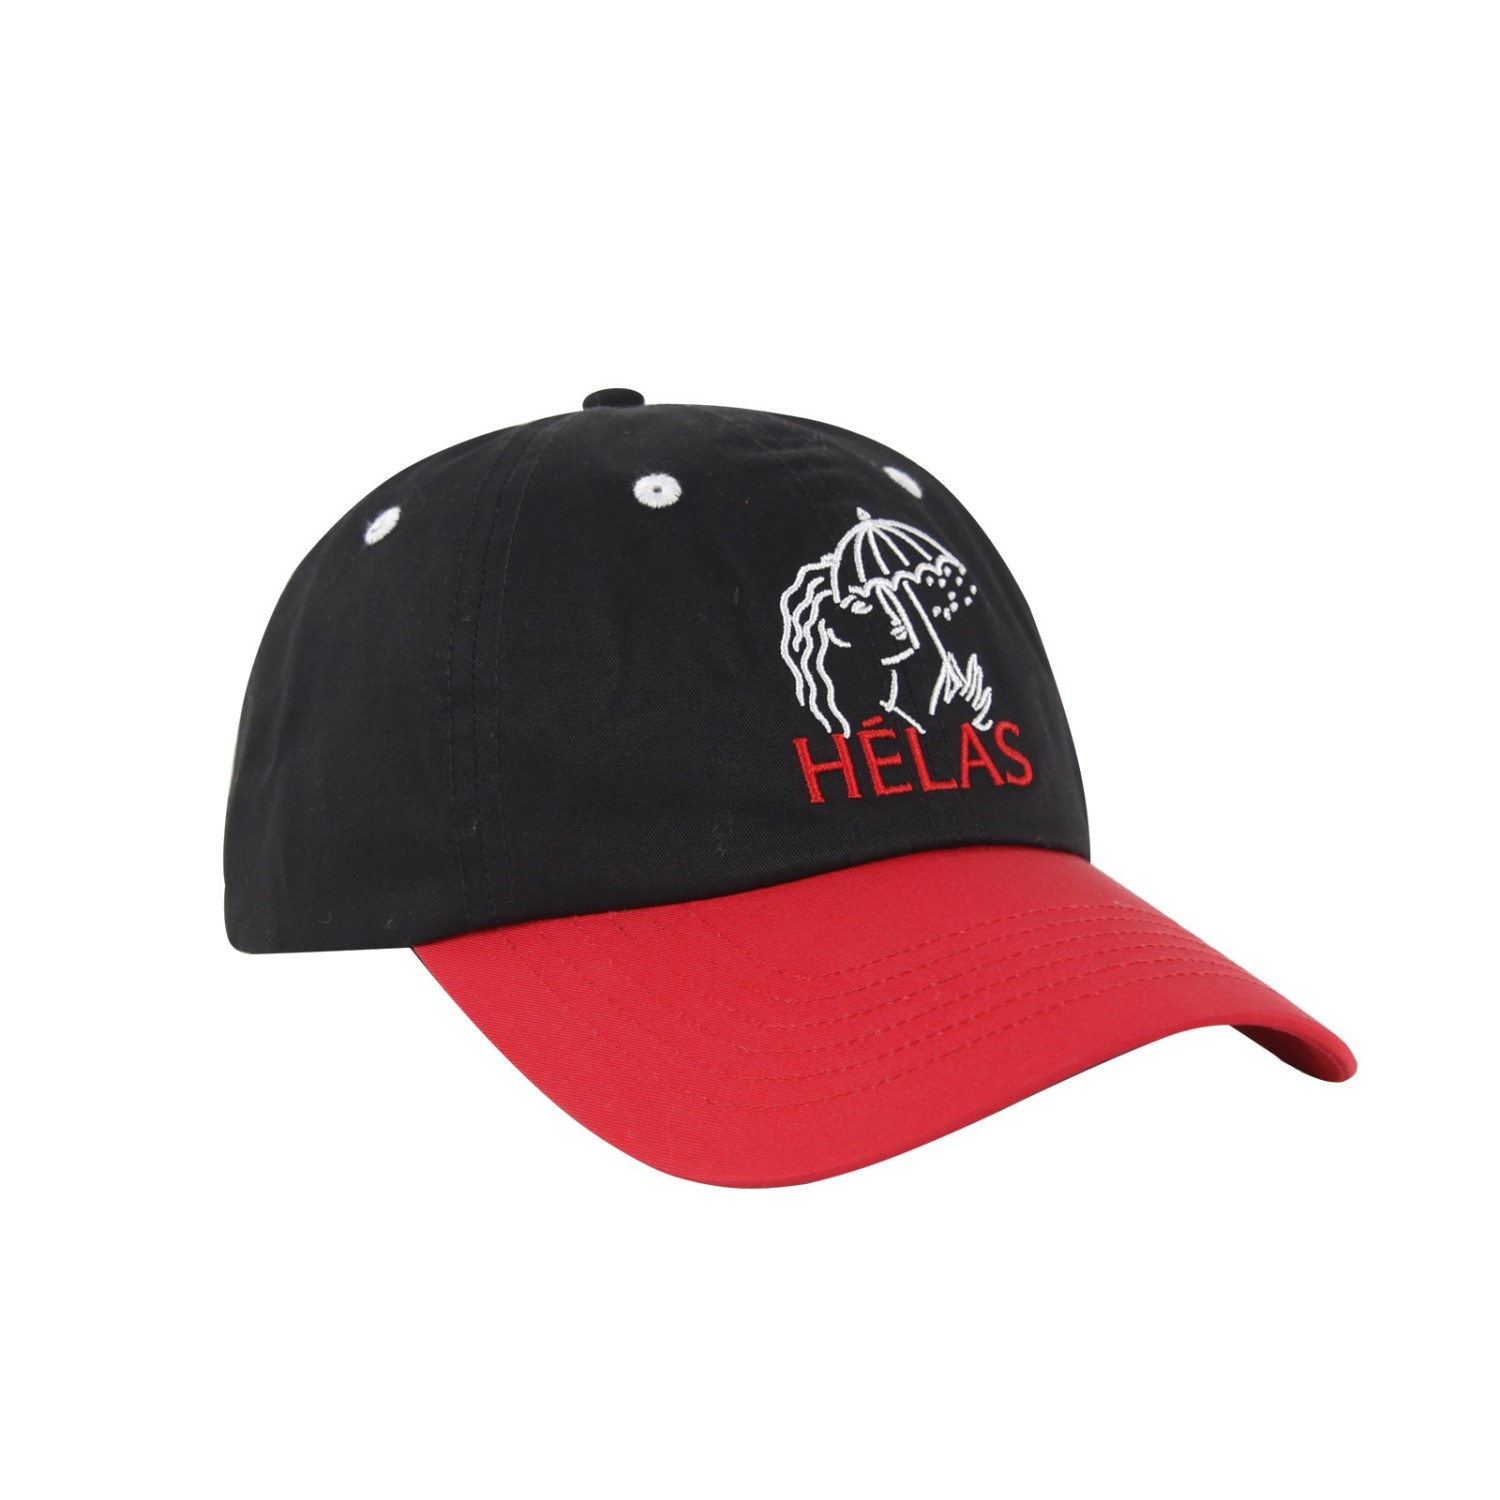 HELAROUSSE CAP BLACK / RED